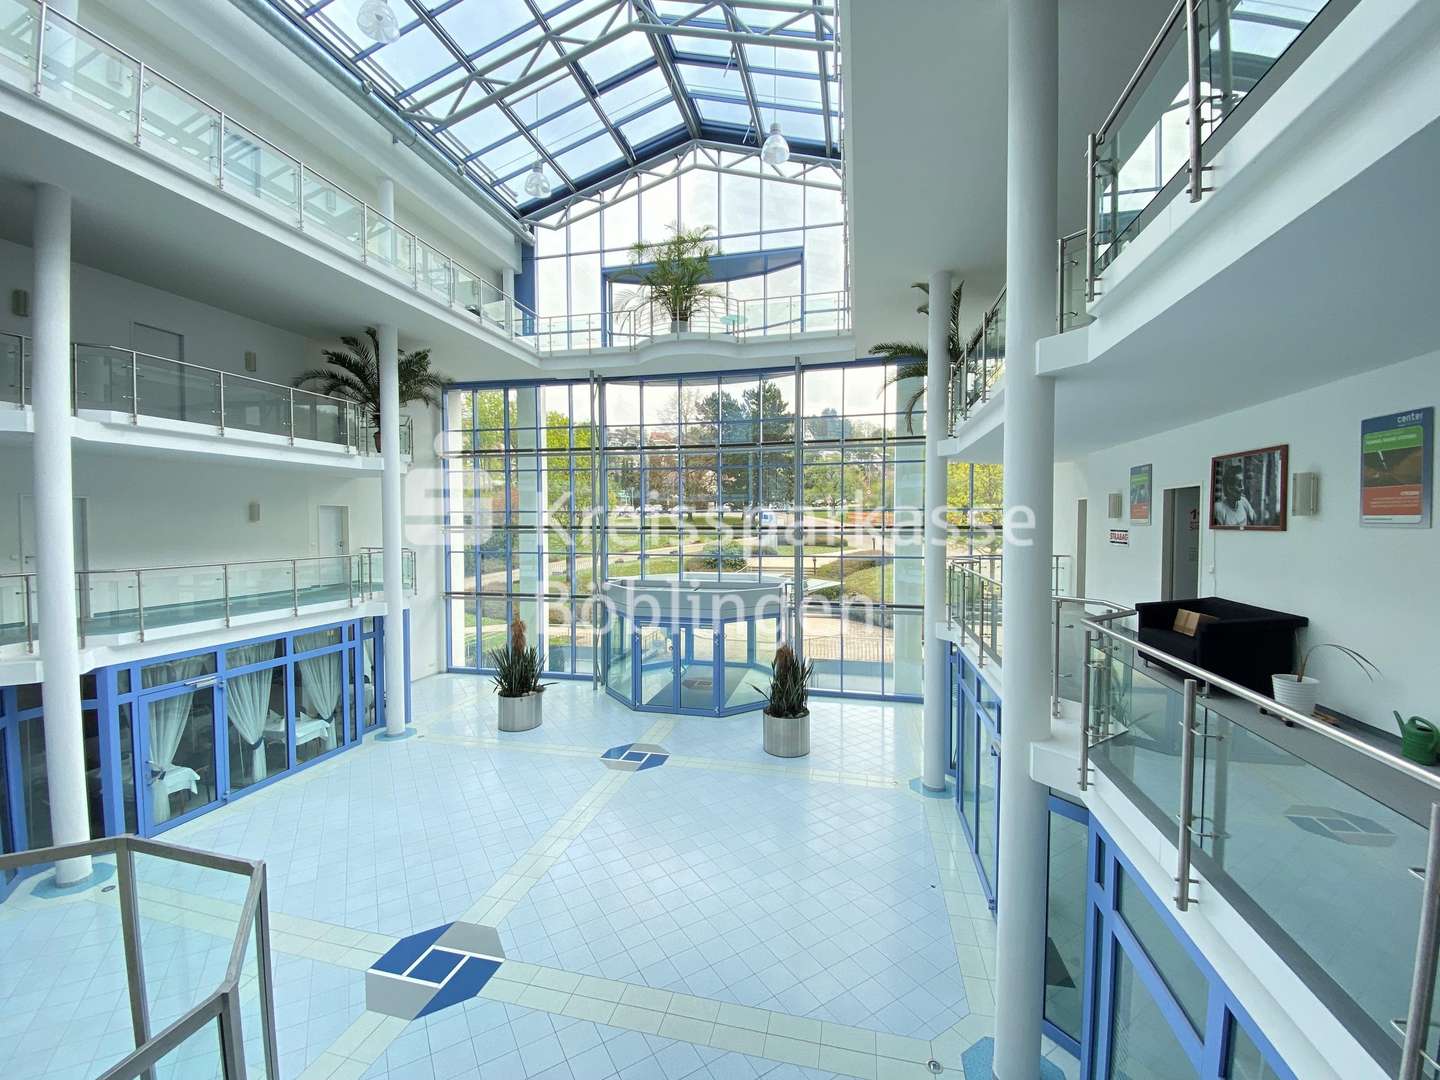 Atrium - Büro in 71229 Leonberg mit 394m² mieten